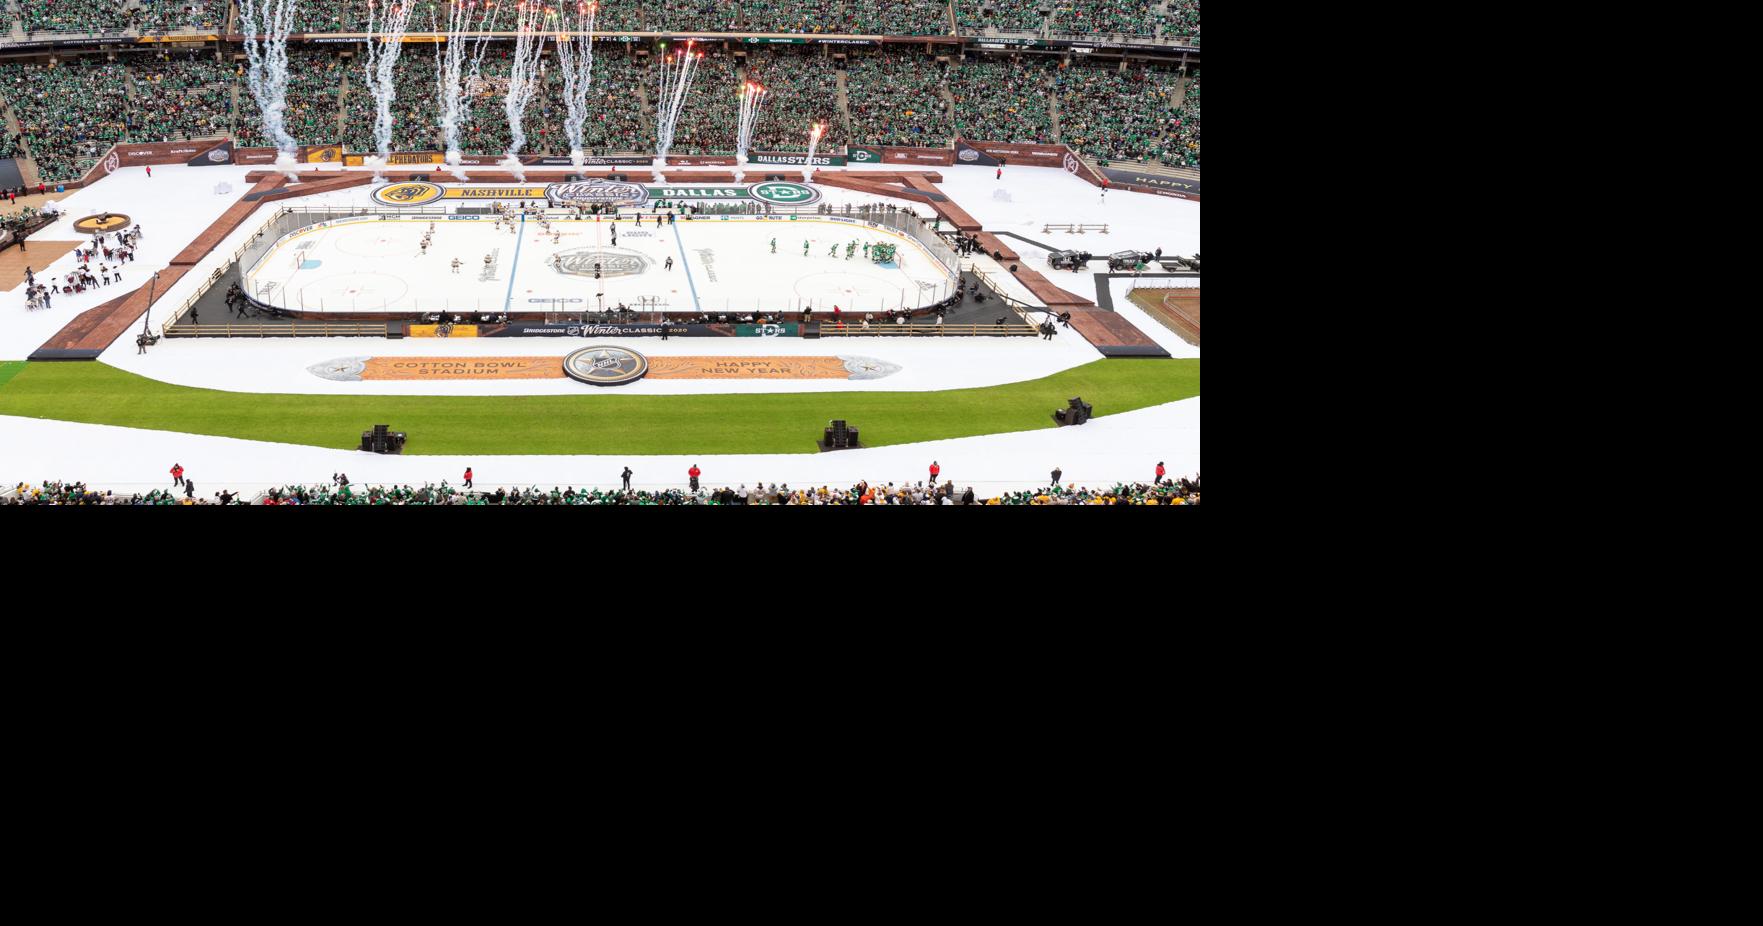 NHL Winter Classic 2020: Nashville Predators vs. Dallas Stars